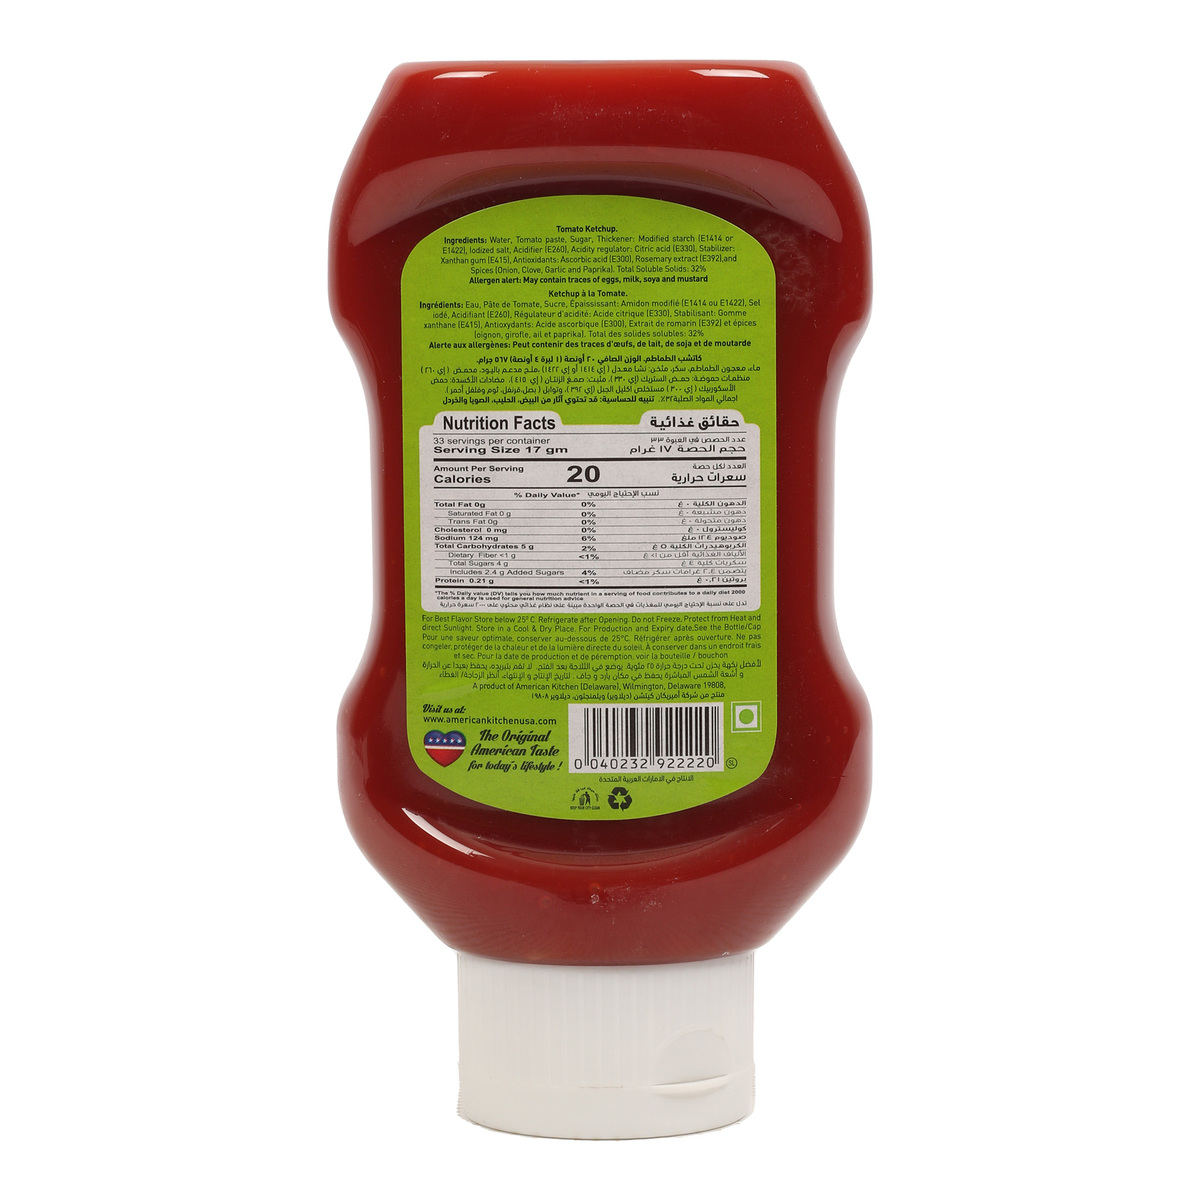 American Kitchen Tomato Ketchup 567g